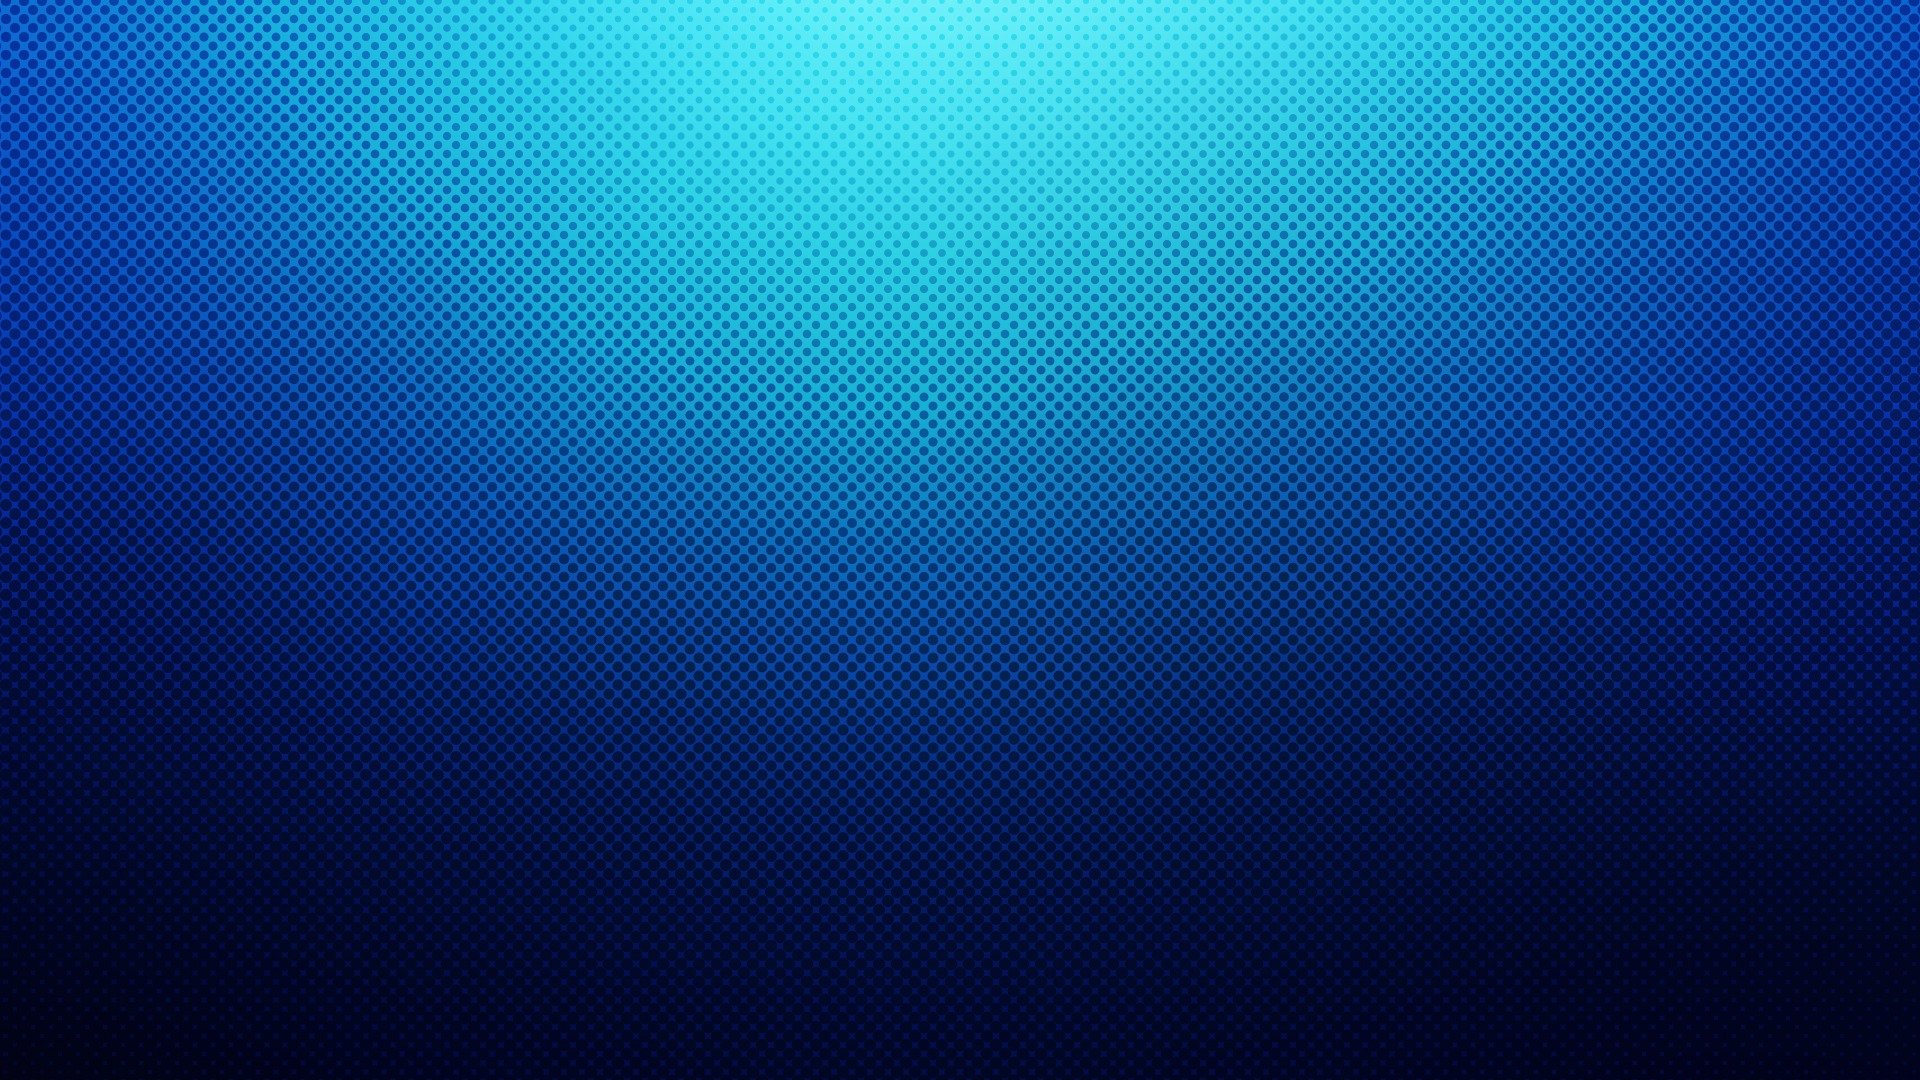  download Blue Gradient Background HD Wallpaper GSEII VISION 1920x1080